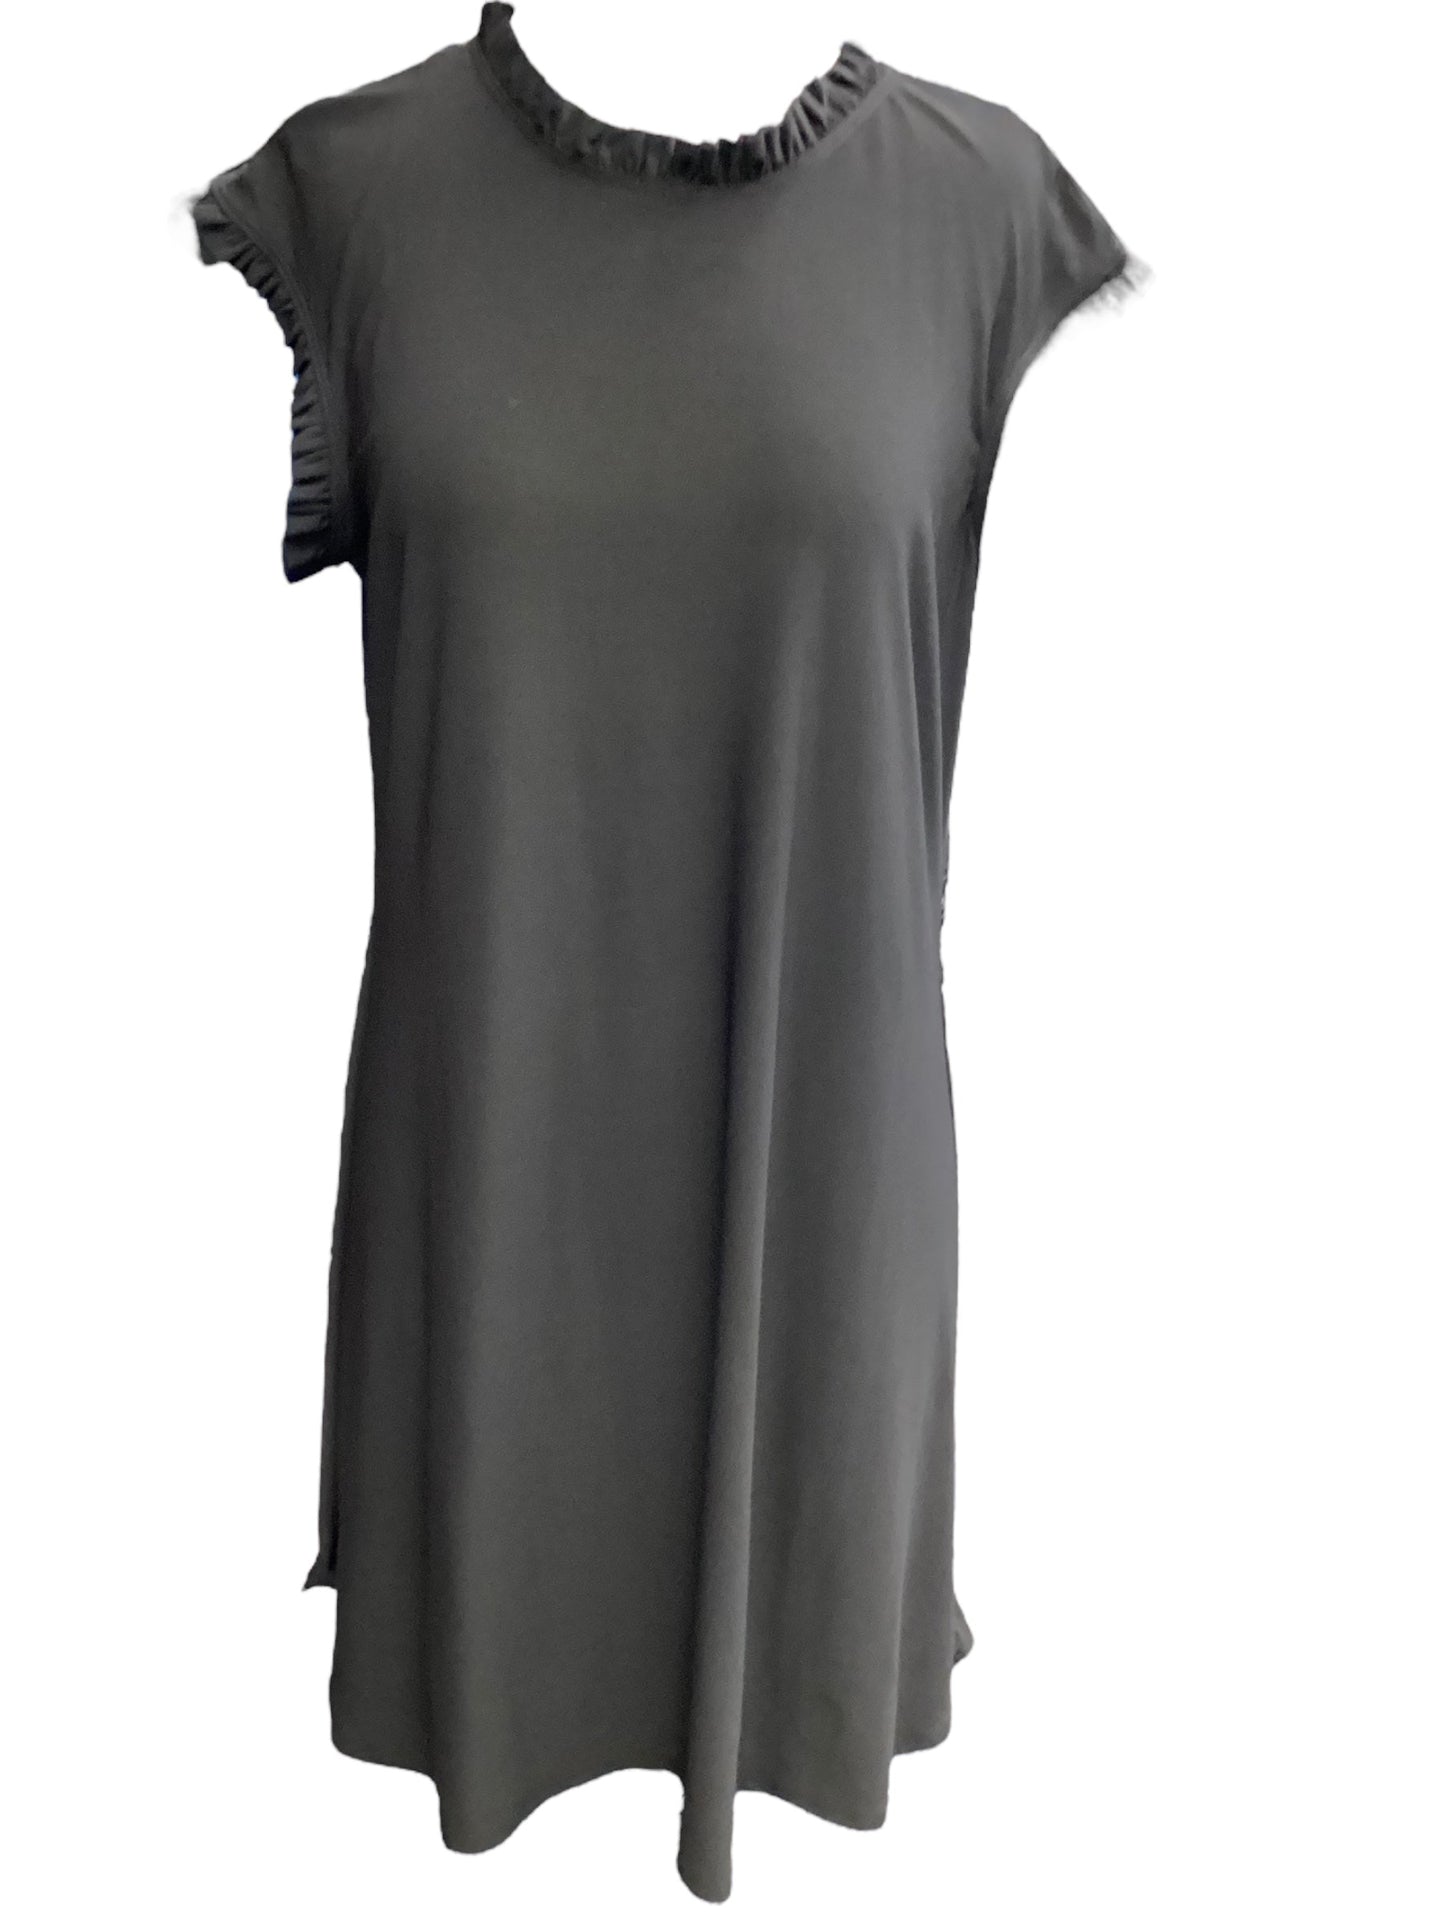 Black Dress Casual Midi Nicole Miller, Size Xl